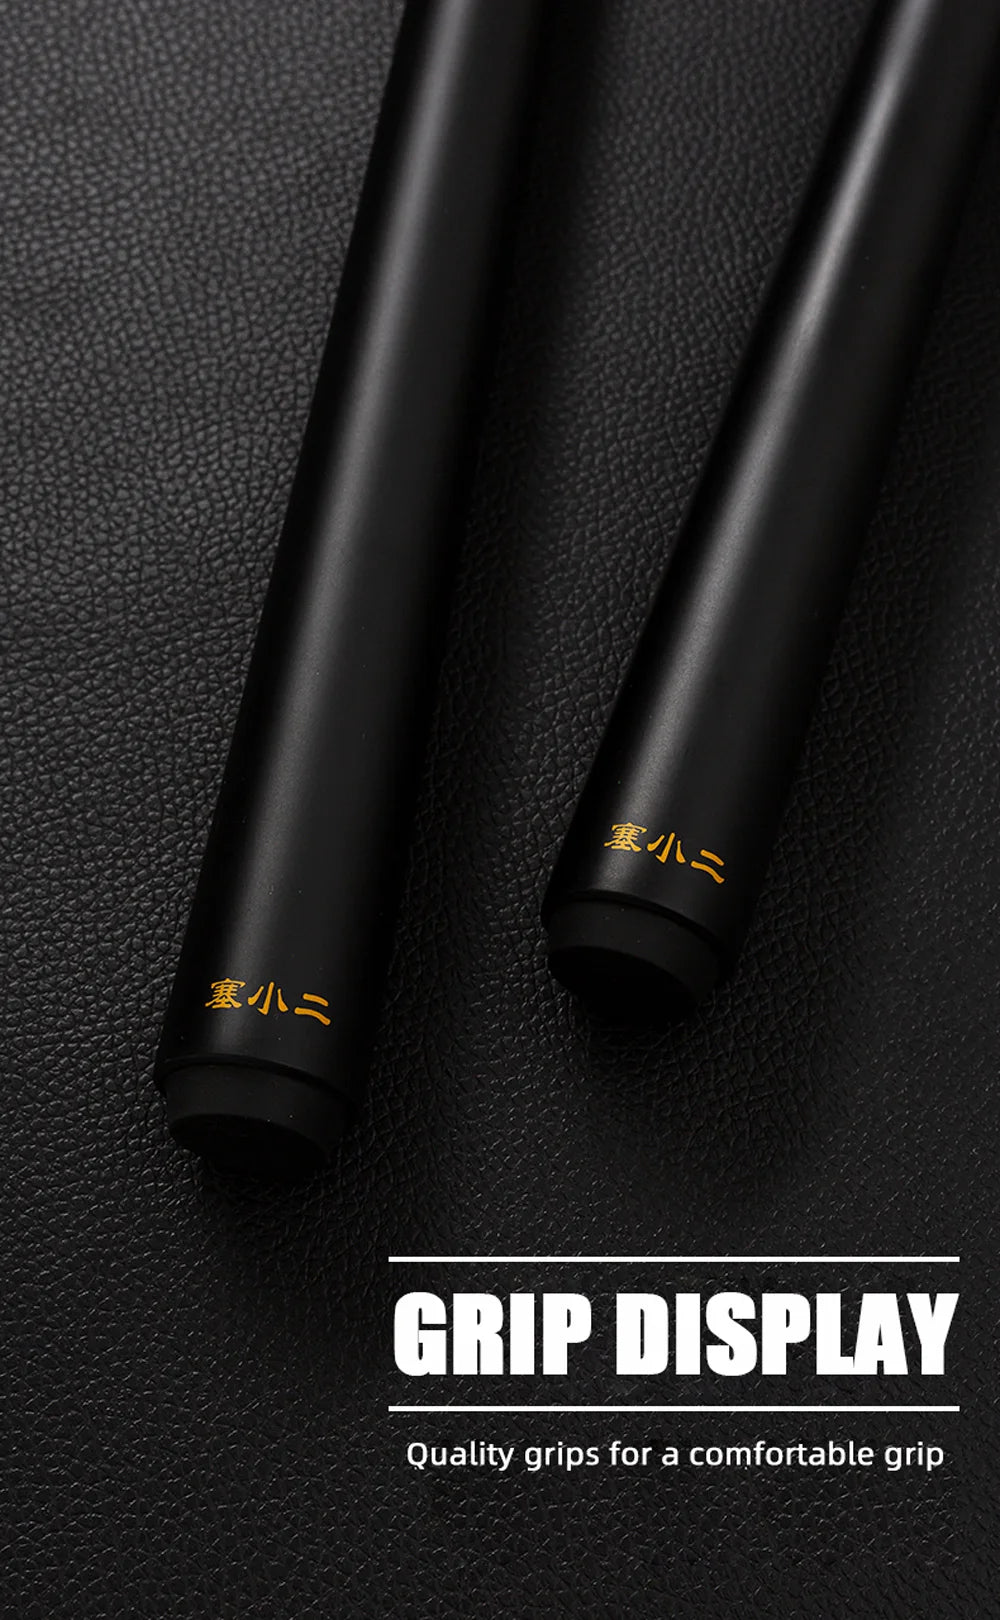 Sai Xiaoer Black technology Punch Carbon Fiber Cue 13mm 58'' Bakelit Tip 1/2 Break Cue Uniloc Pin Joint Billiard Table Cue